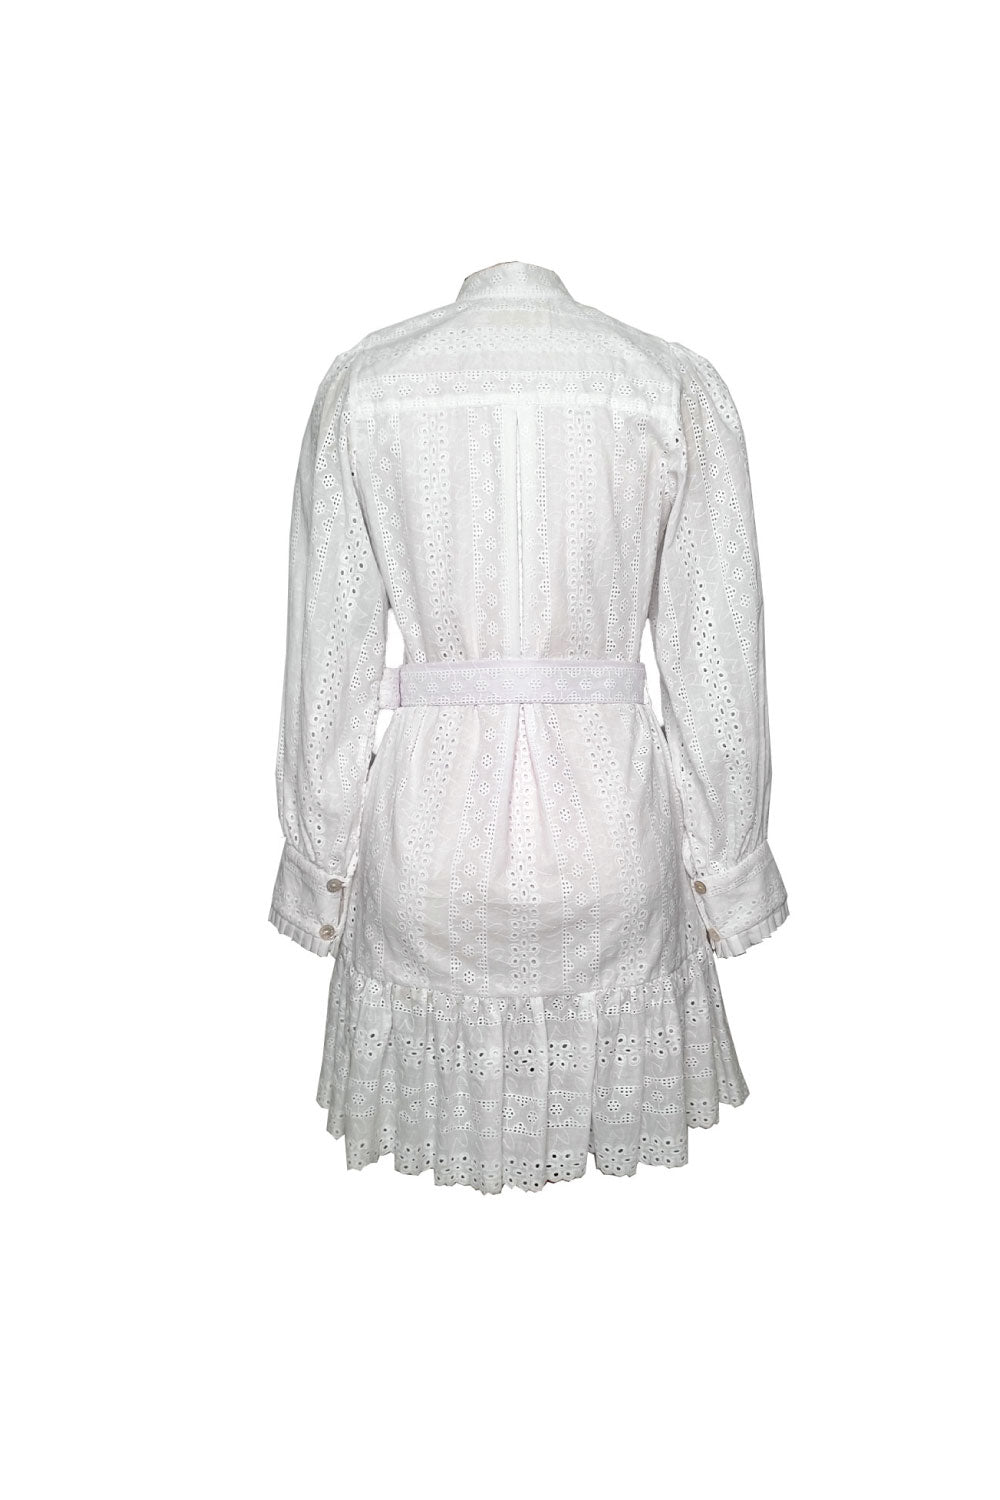 Image of the back of Liliana Meza's Attina Dress in White.